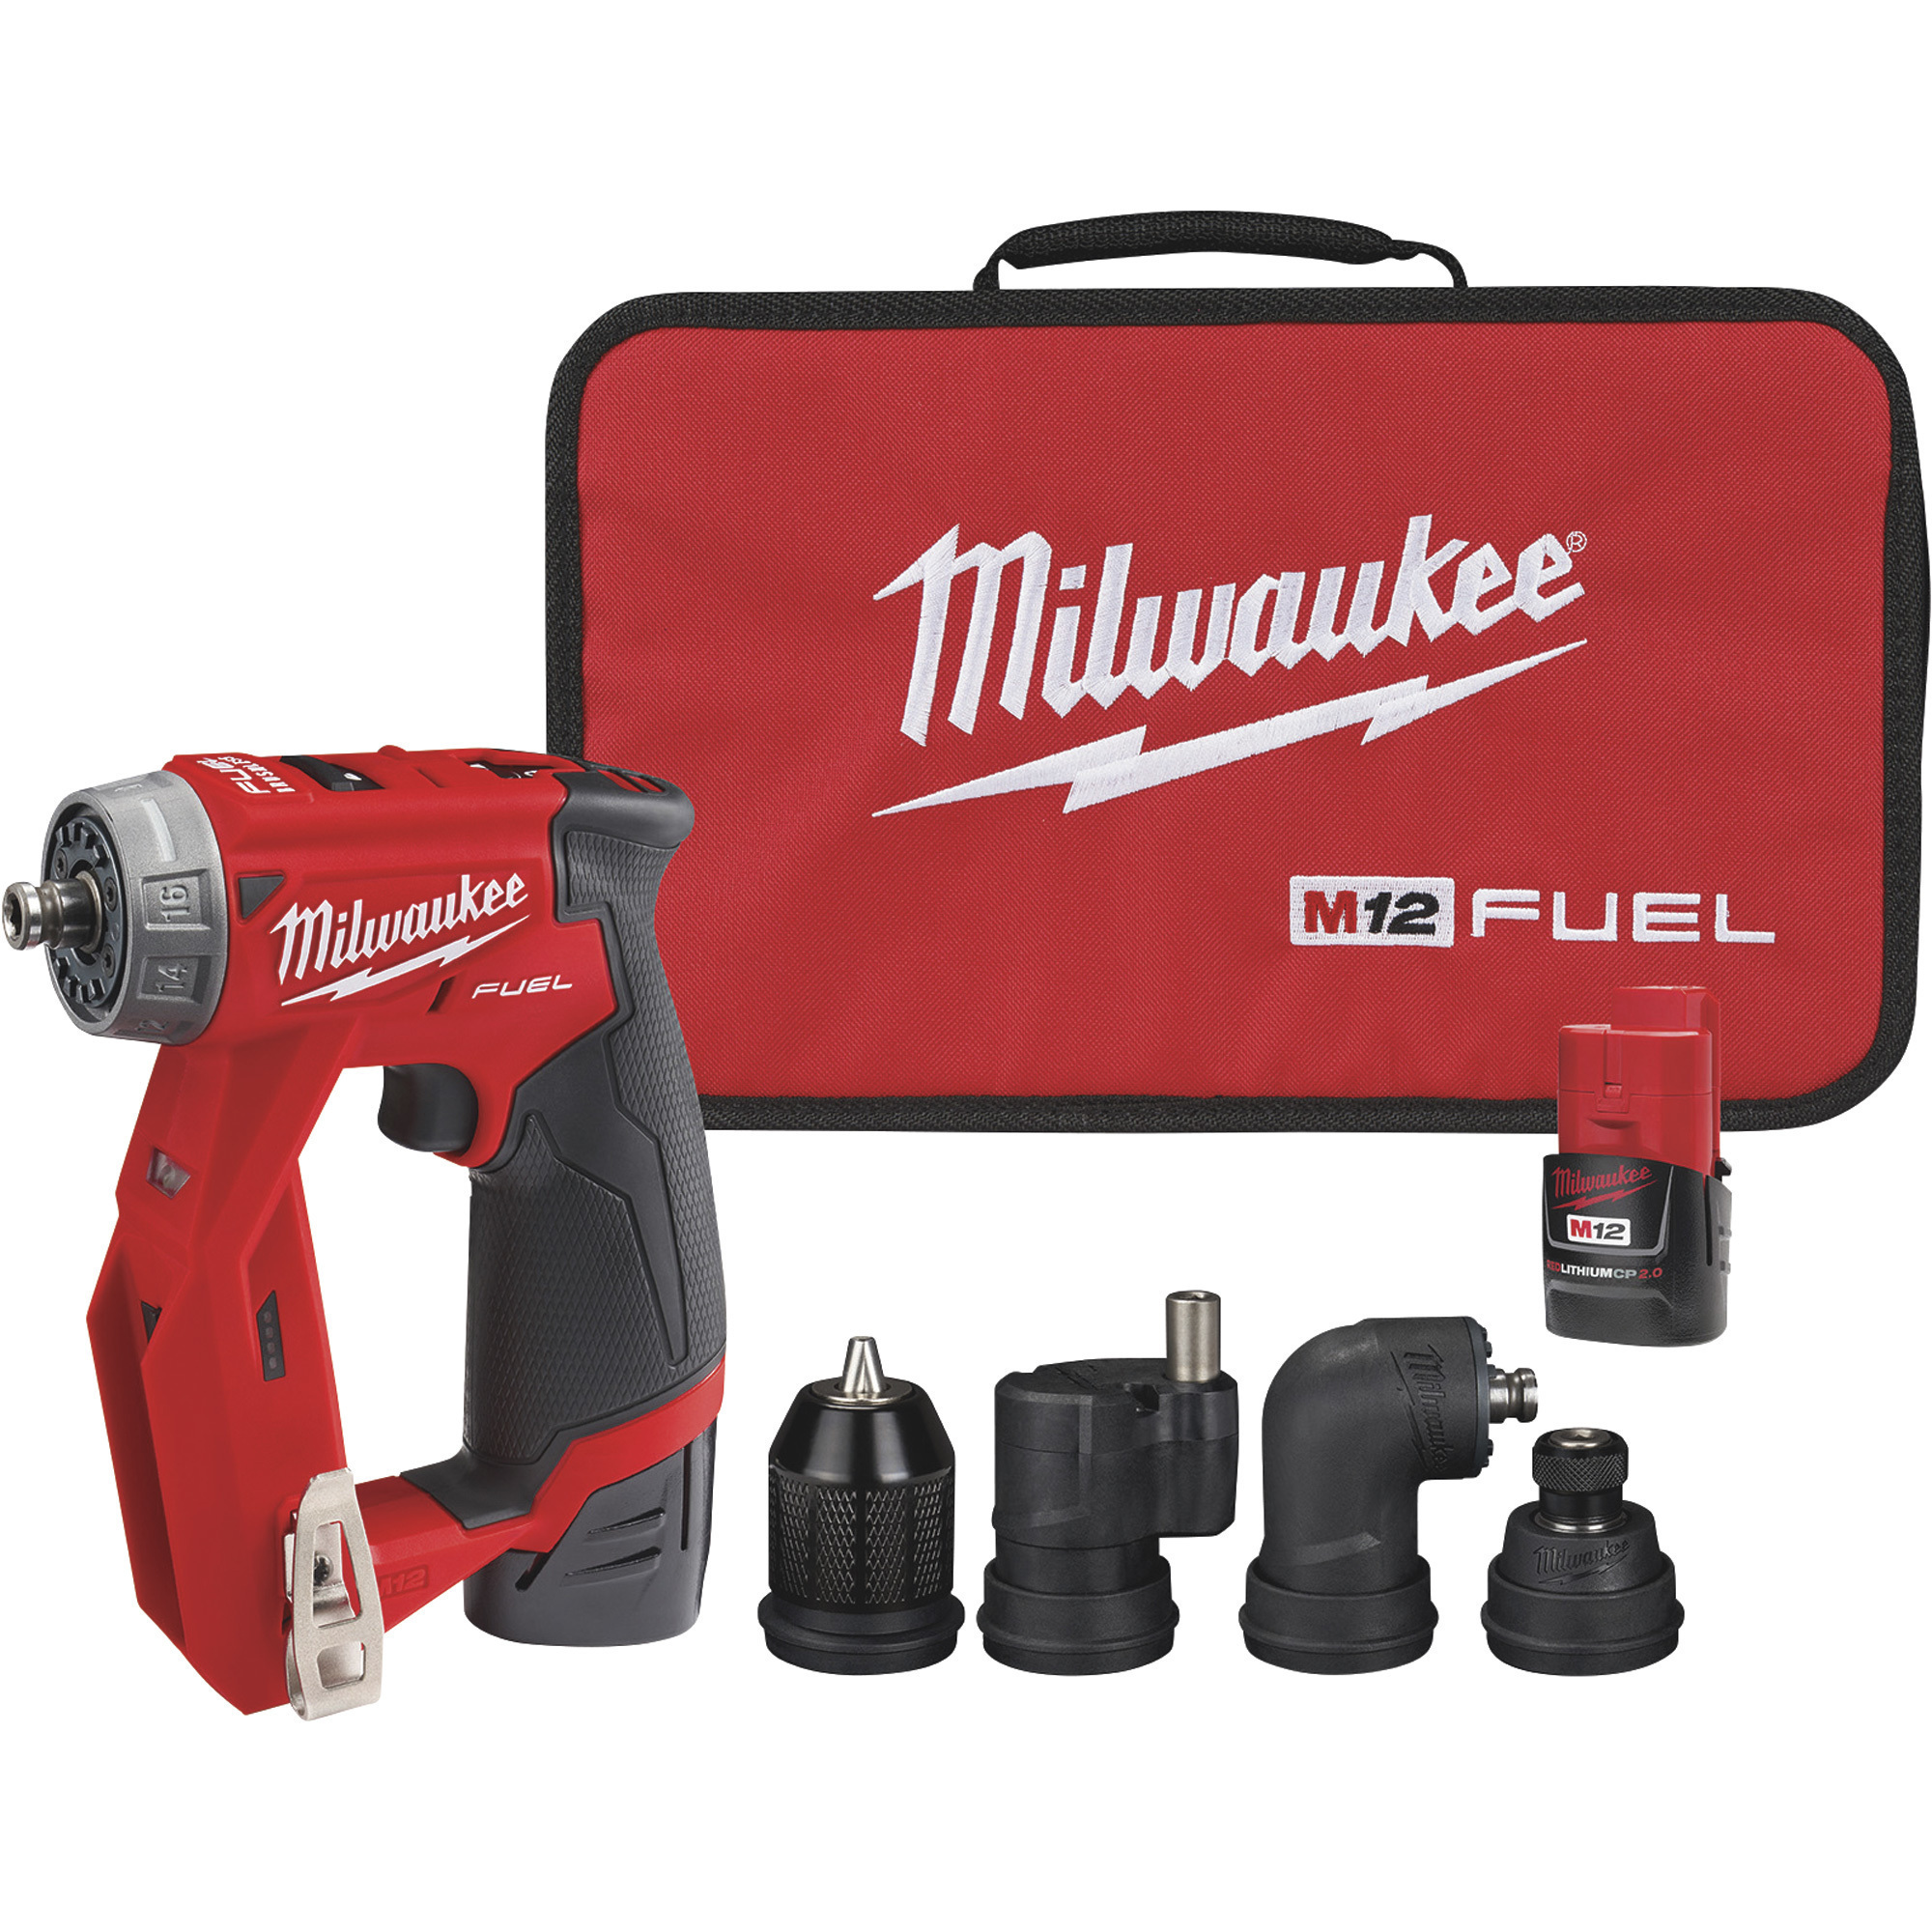 Milwaukee M12 FUEL Installation Drill/Driver Kit, 2 Batteries, 300 Inch/Lbs. Torque, 1600 RPM, Model 2505-22